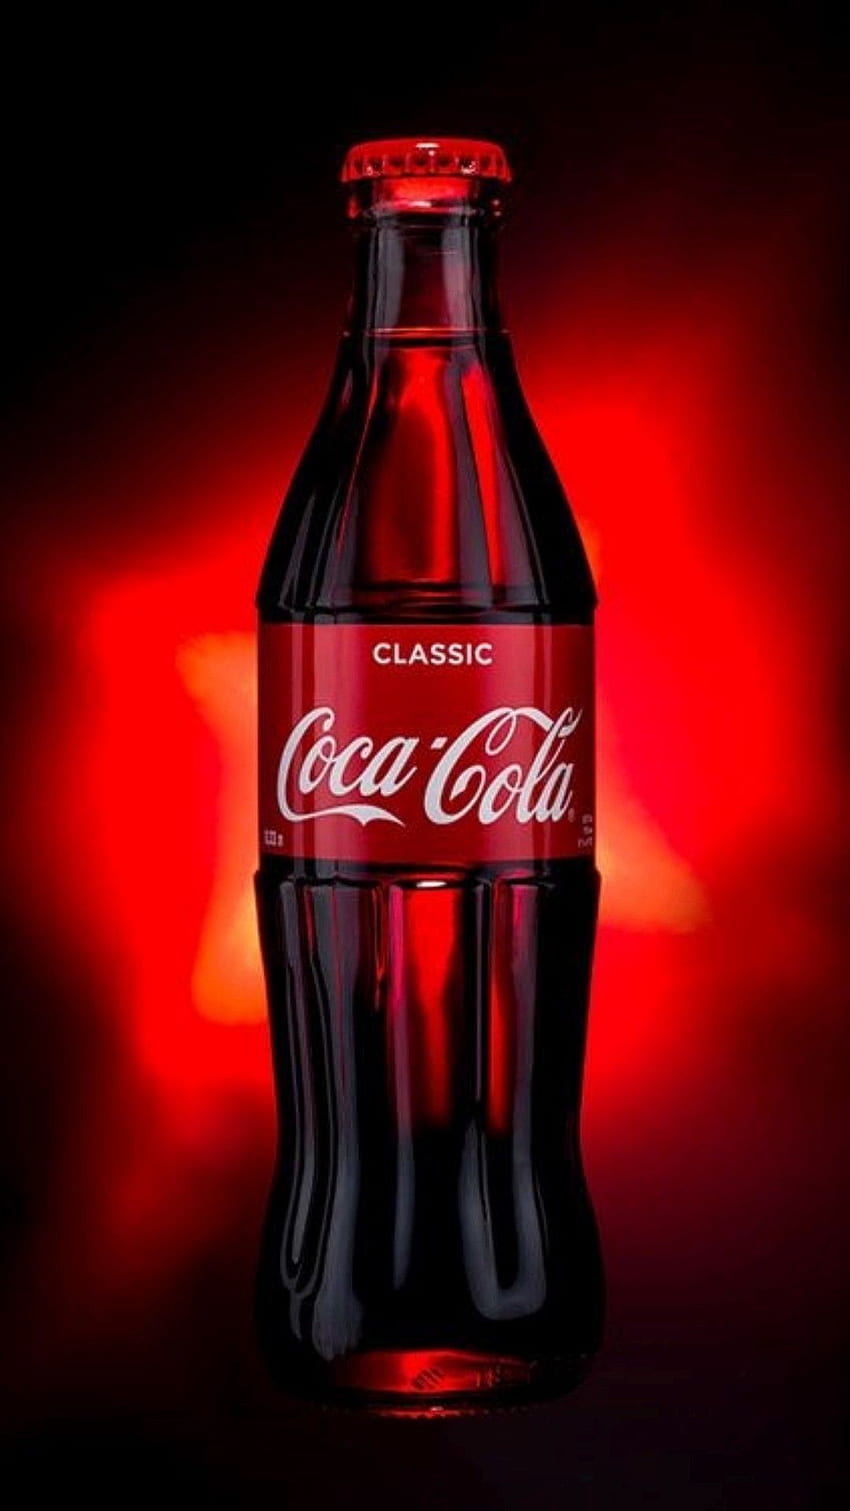 Wallpaper Coca-Cola, drinks, bottle, darkness 3840x2160 UHD 4K Picture,  Image